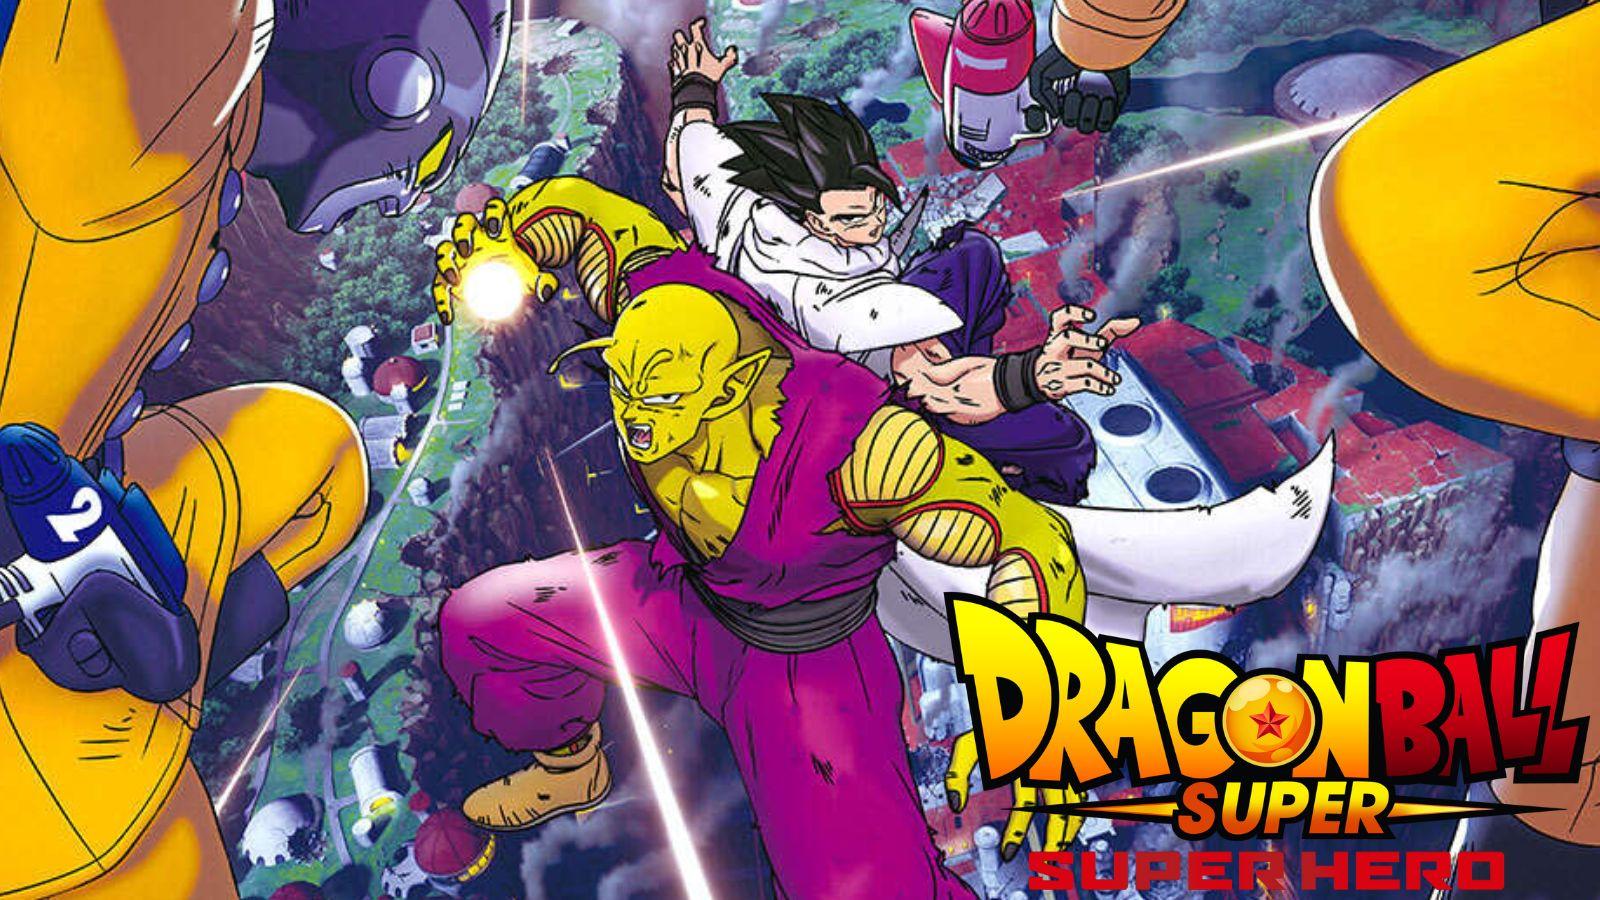 Dragon Ball Super: Super Hero U.S. Rating Revealed